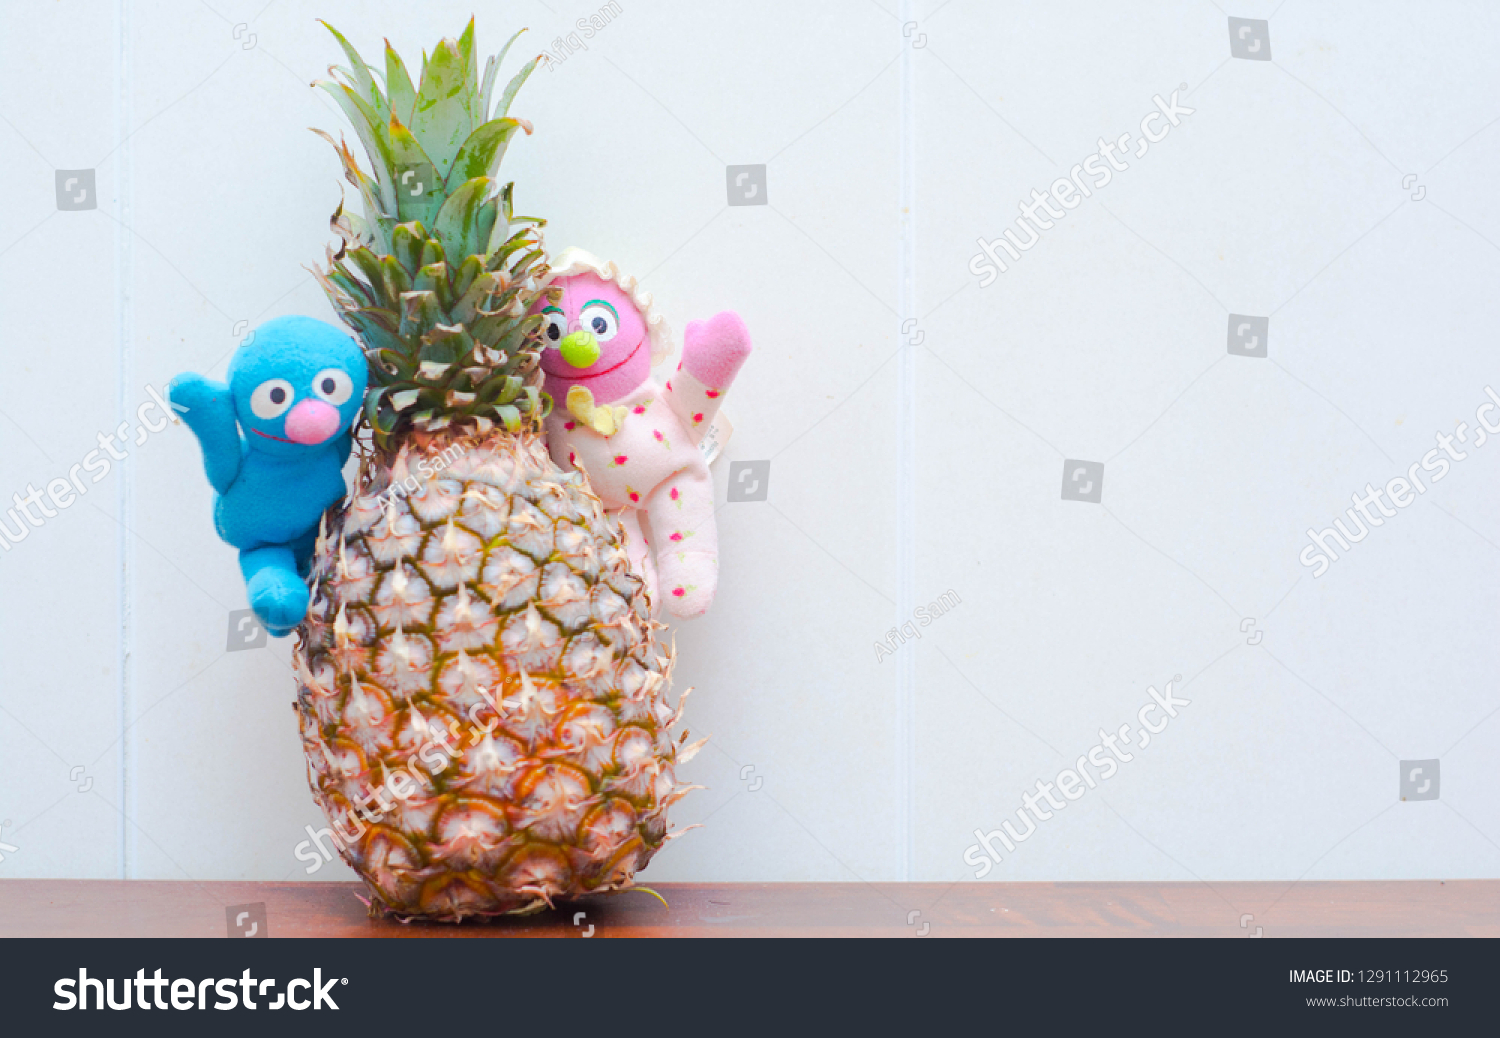 pineapple teddy bear